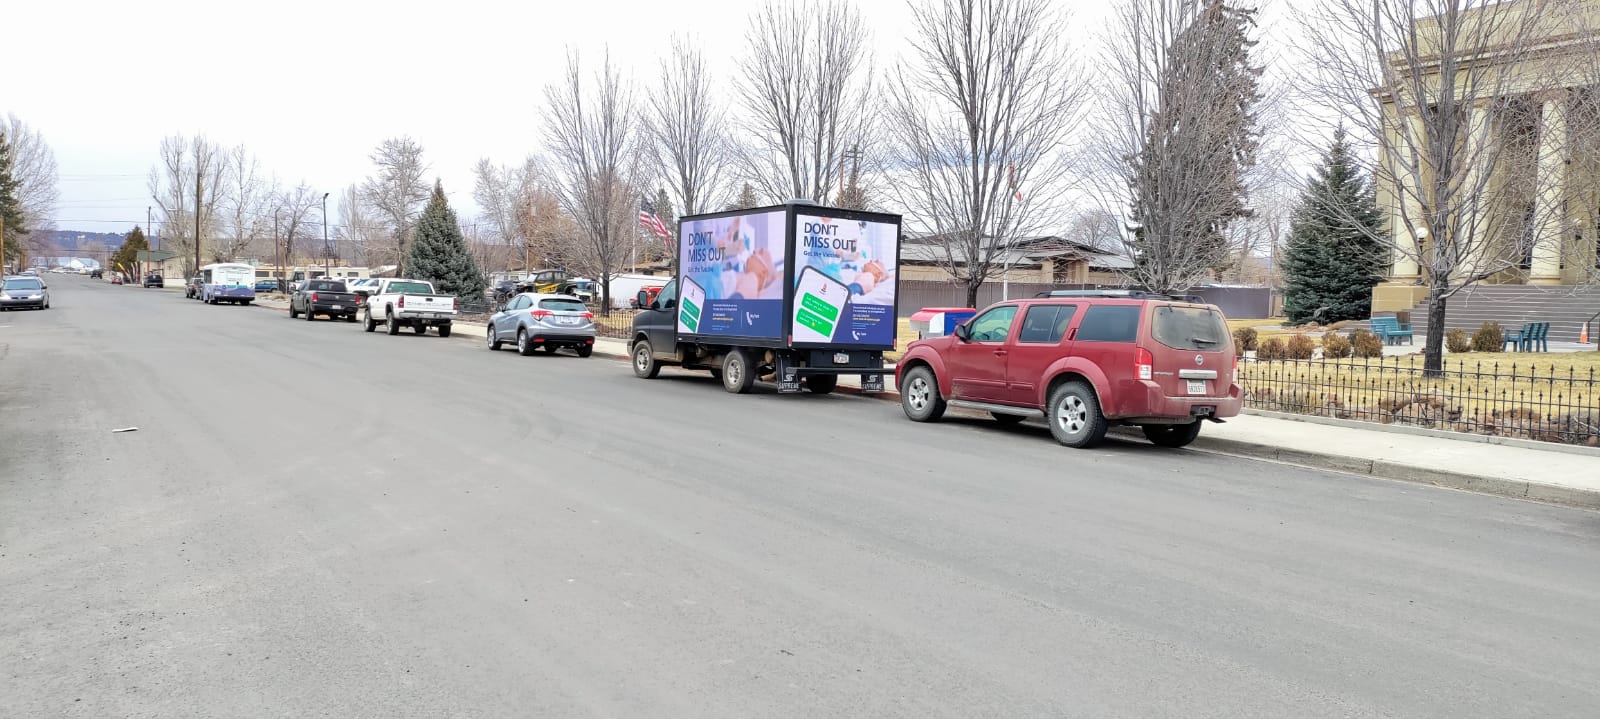 Springfield MO Digital mobile billboard Trucks (3)